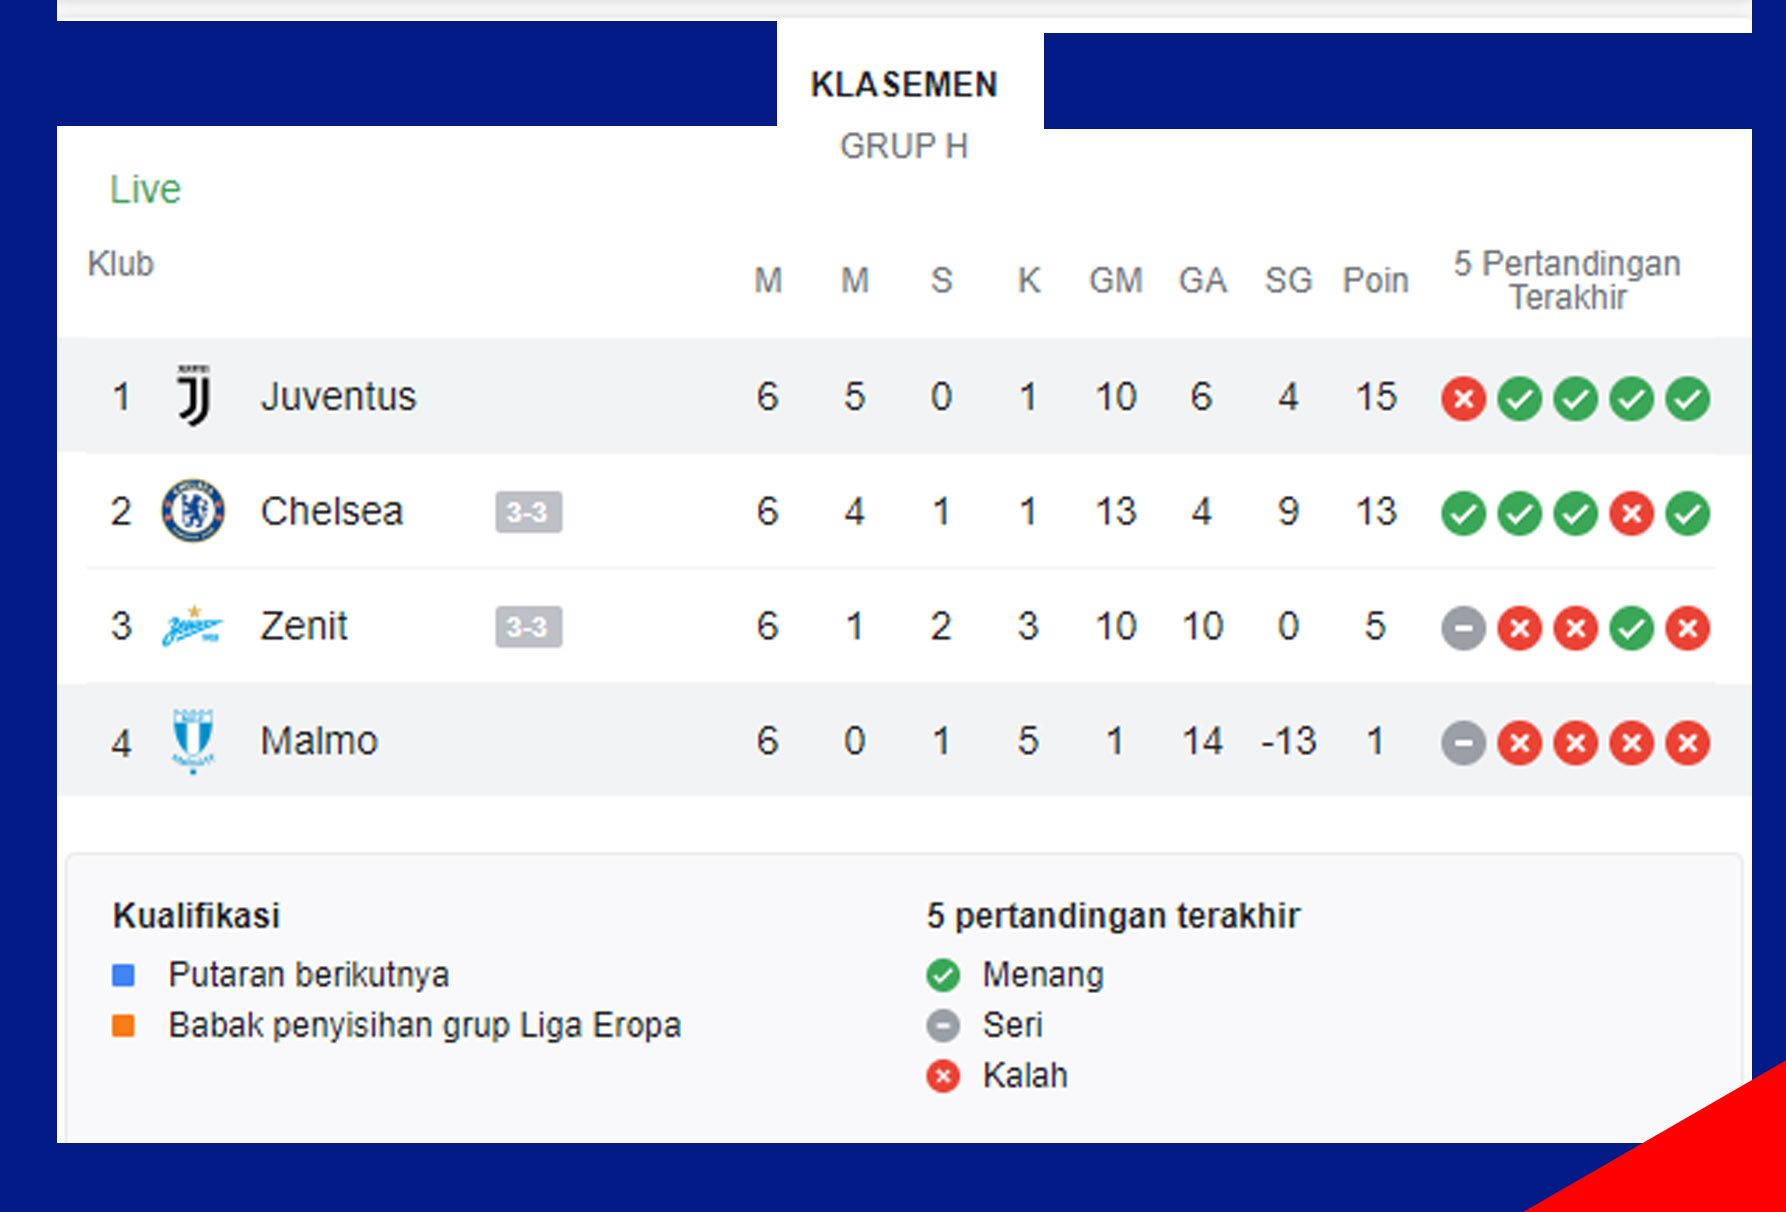 Klasemen Group H Liga Champions